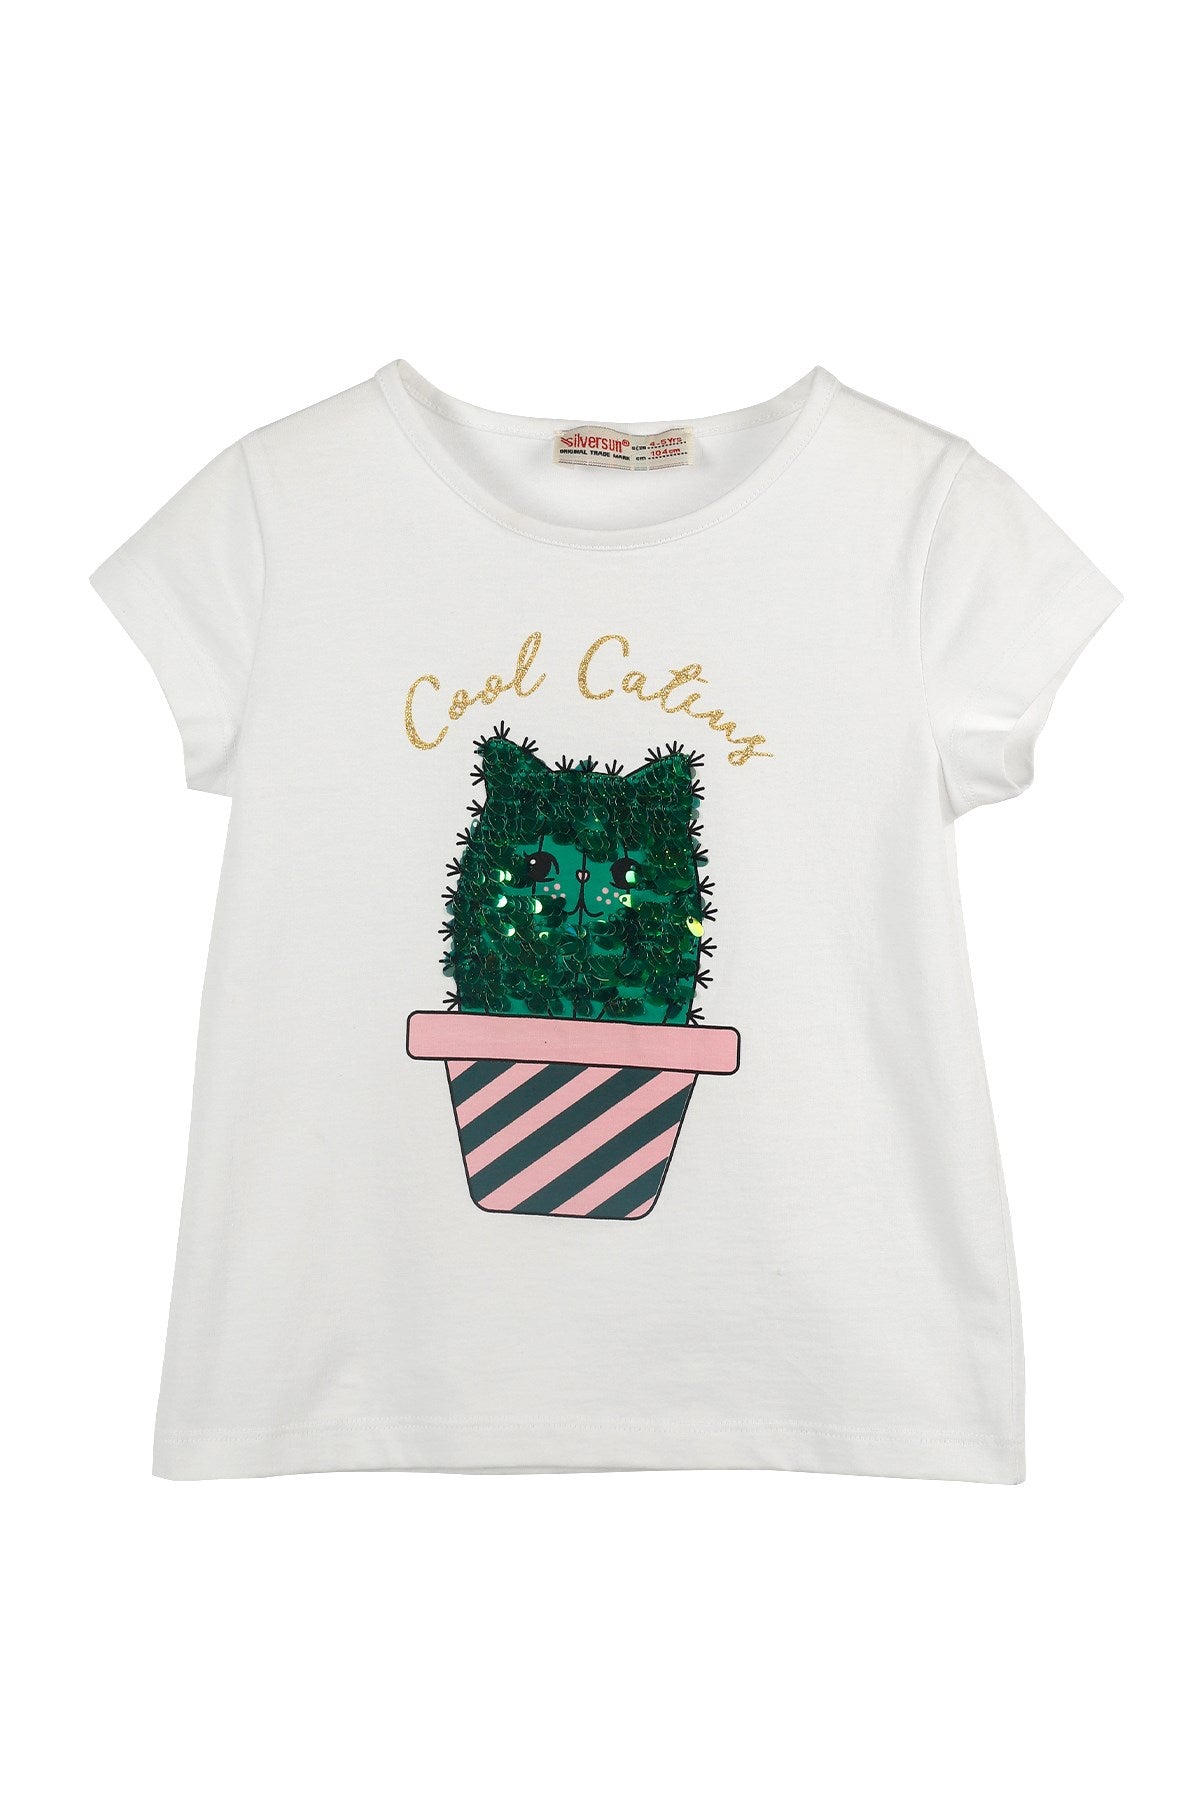 Cool Cactus Girls T-shirt